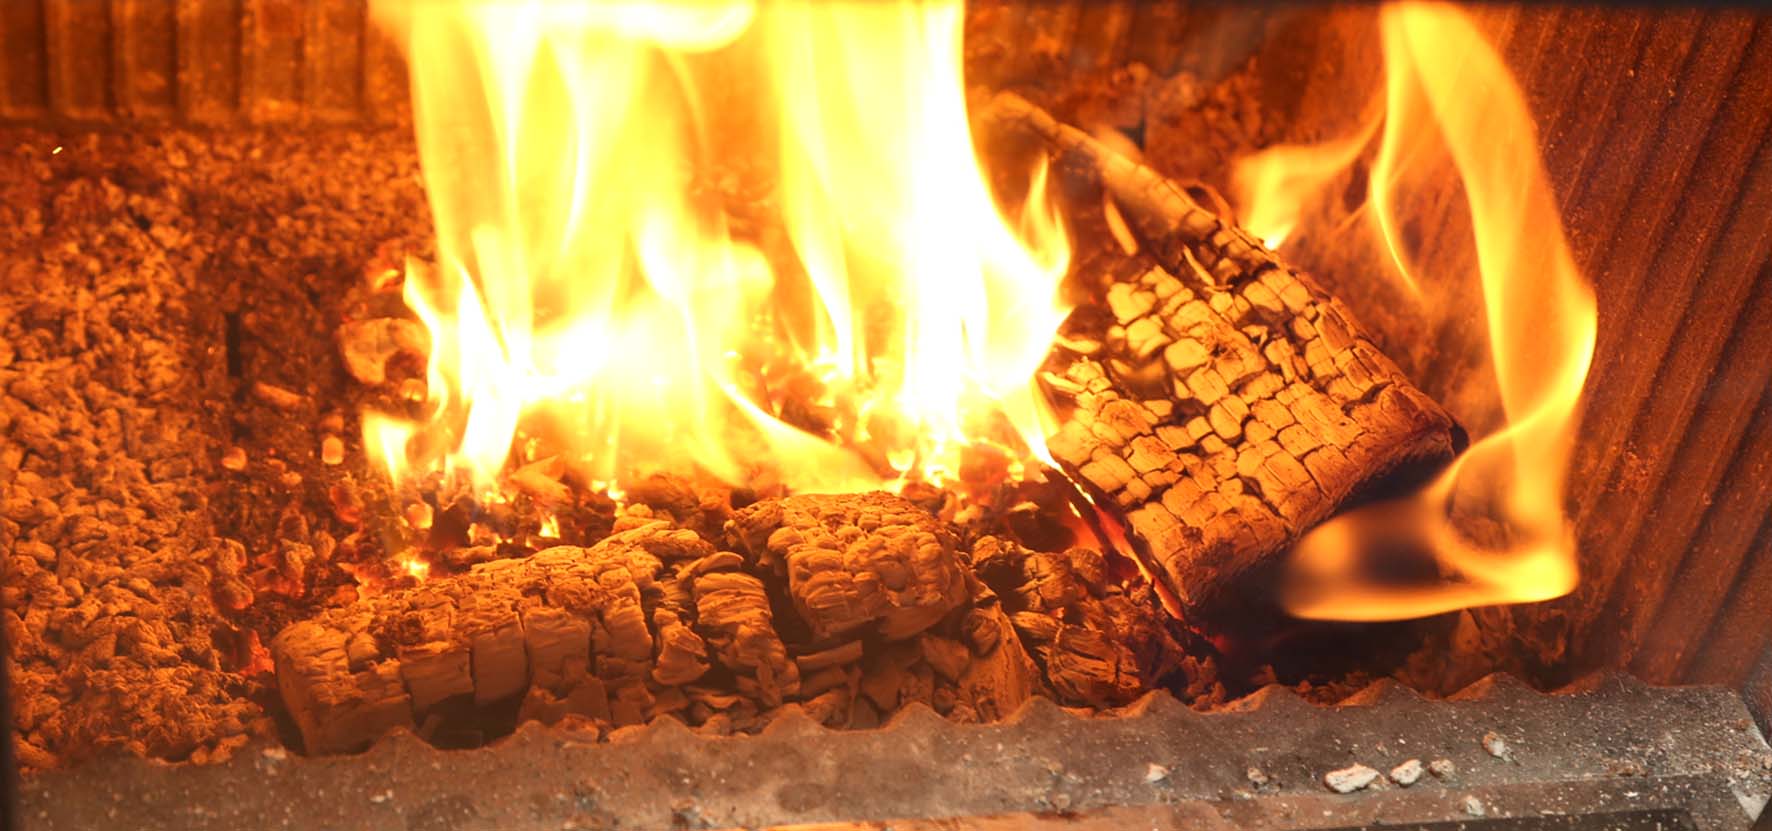 prezzo del pellet progetto fuoco verona 2016 pellet legna insieme